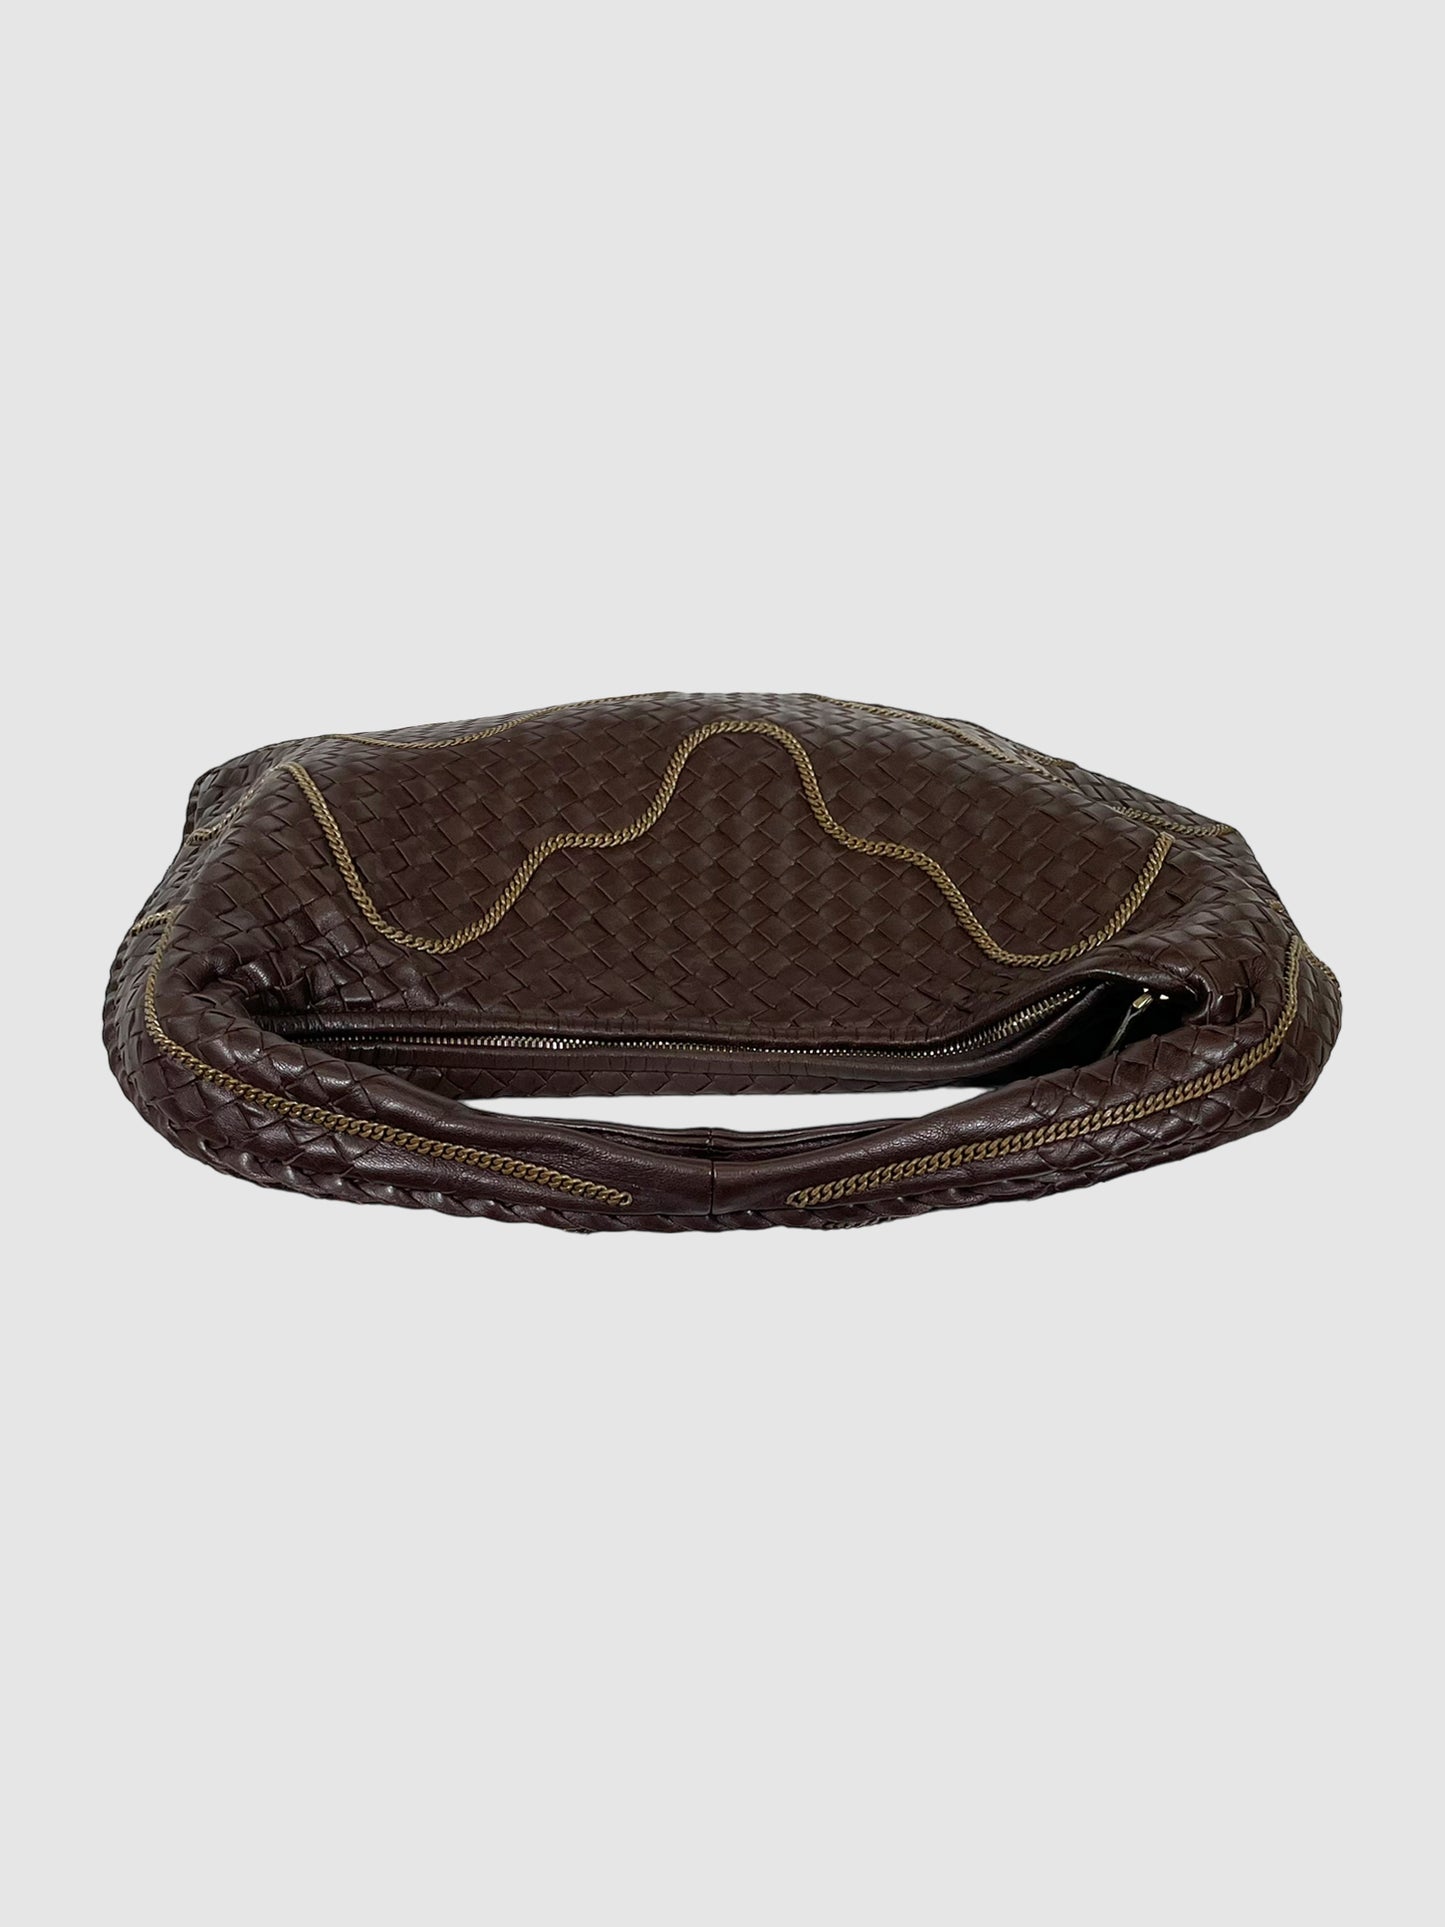 Bottega Veneta Intrecciato Leather Chain Link Detail Hobo Bag